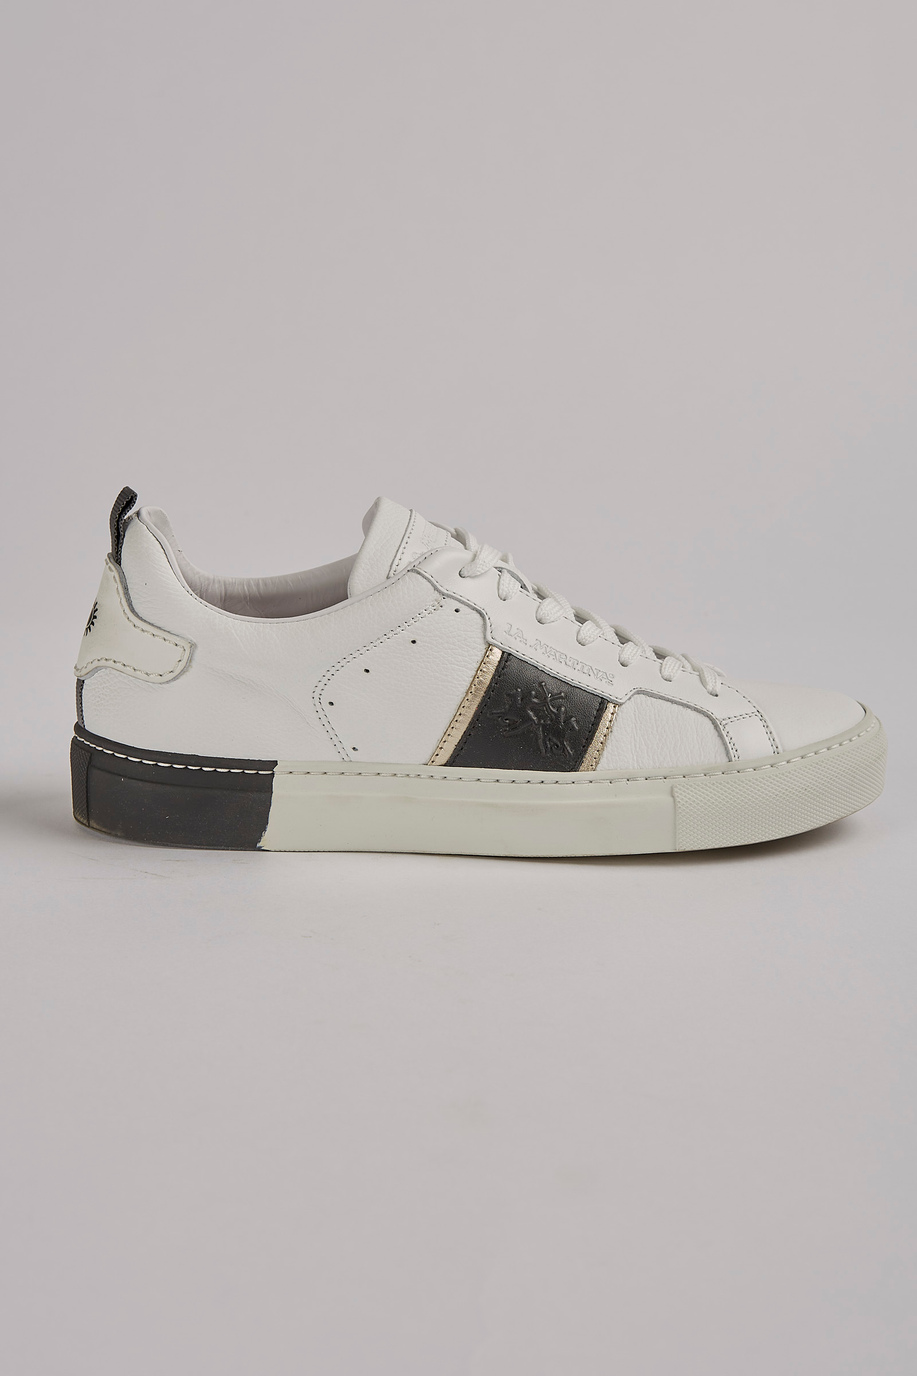 Sneaker in pelle - Scarpe donna | La Martina - Official Online Shop